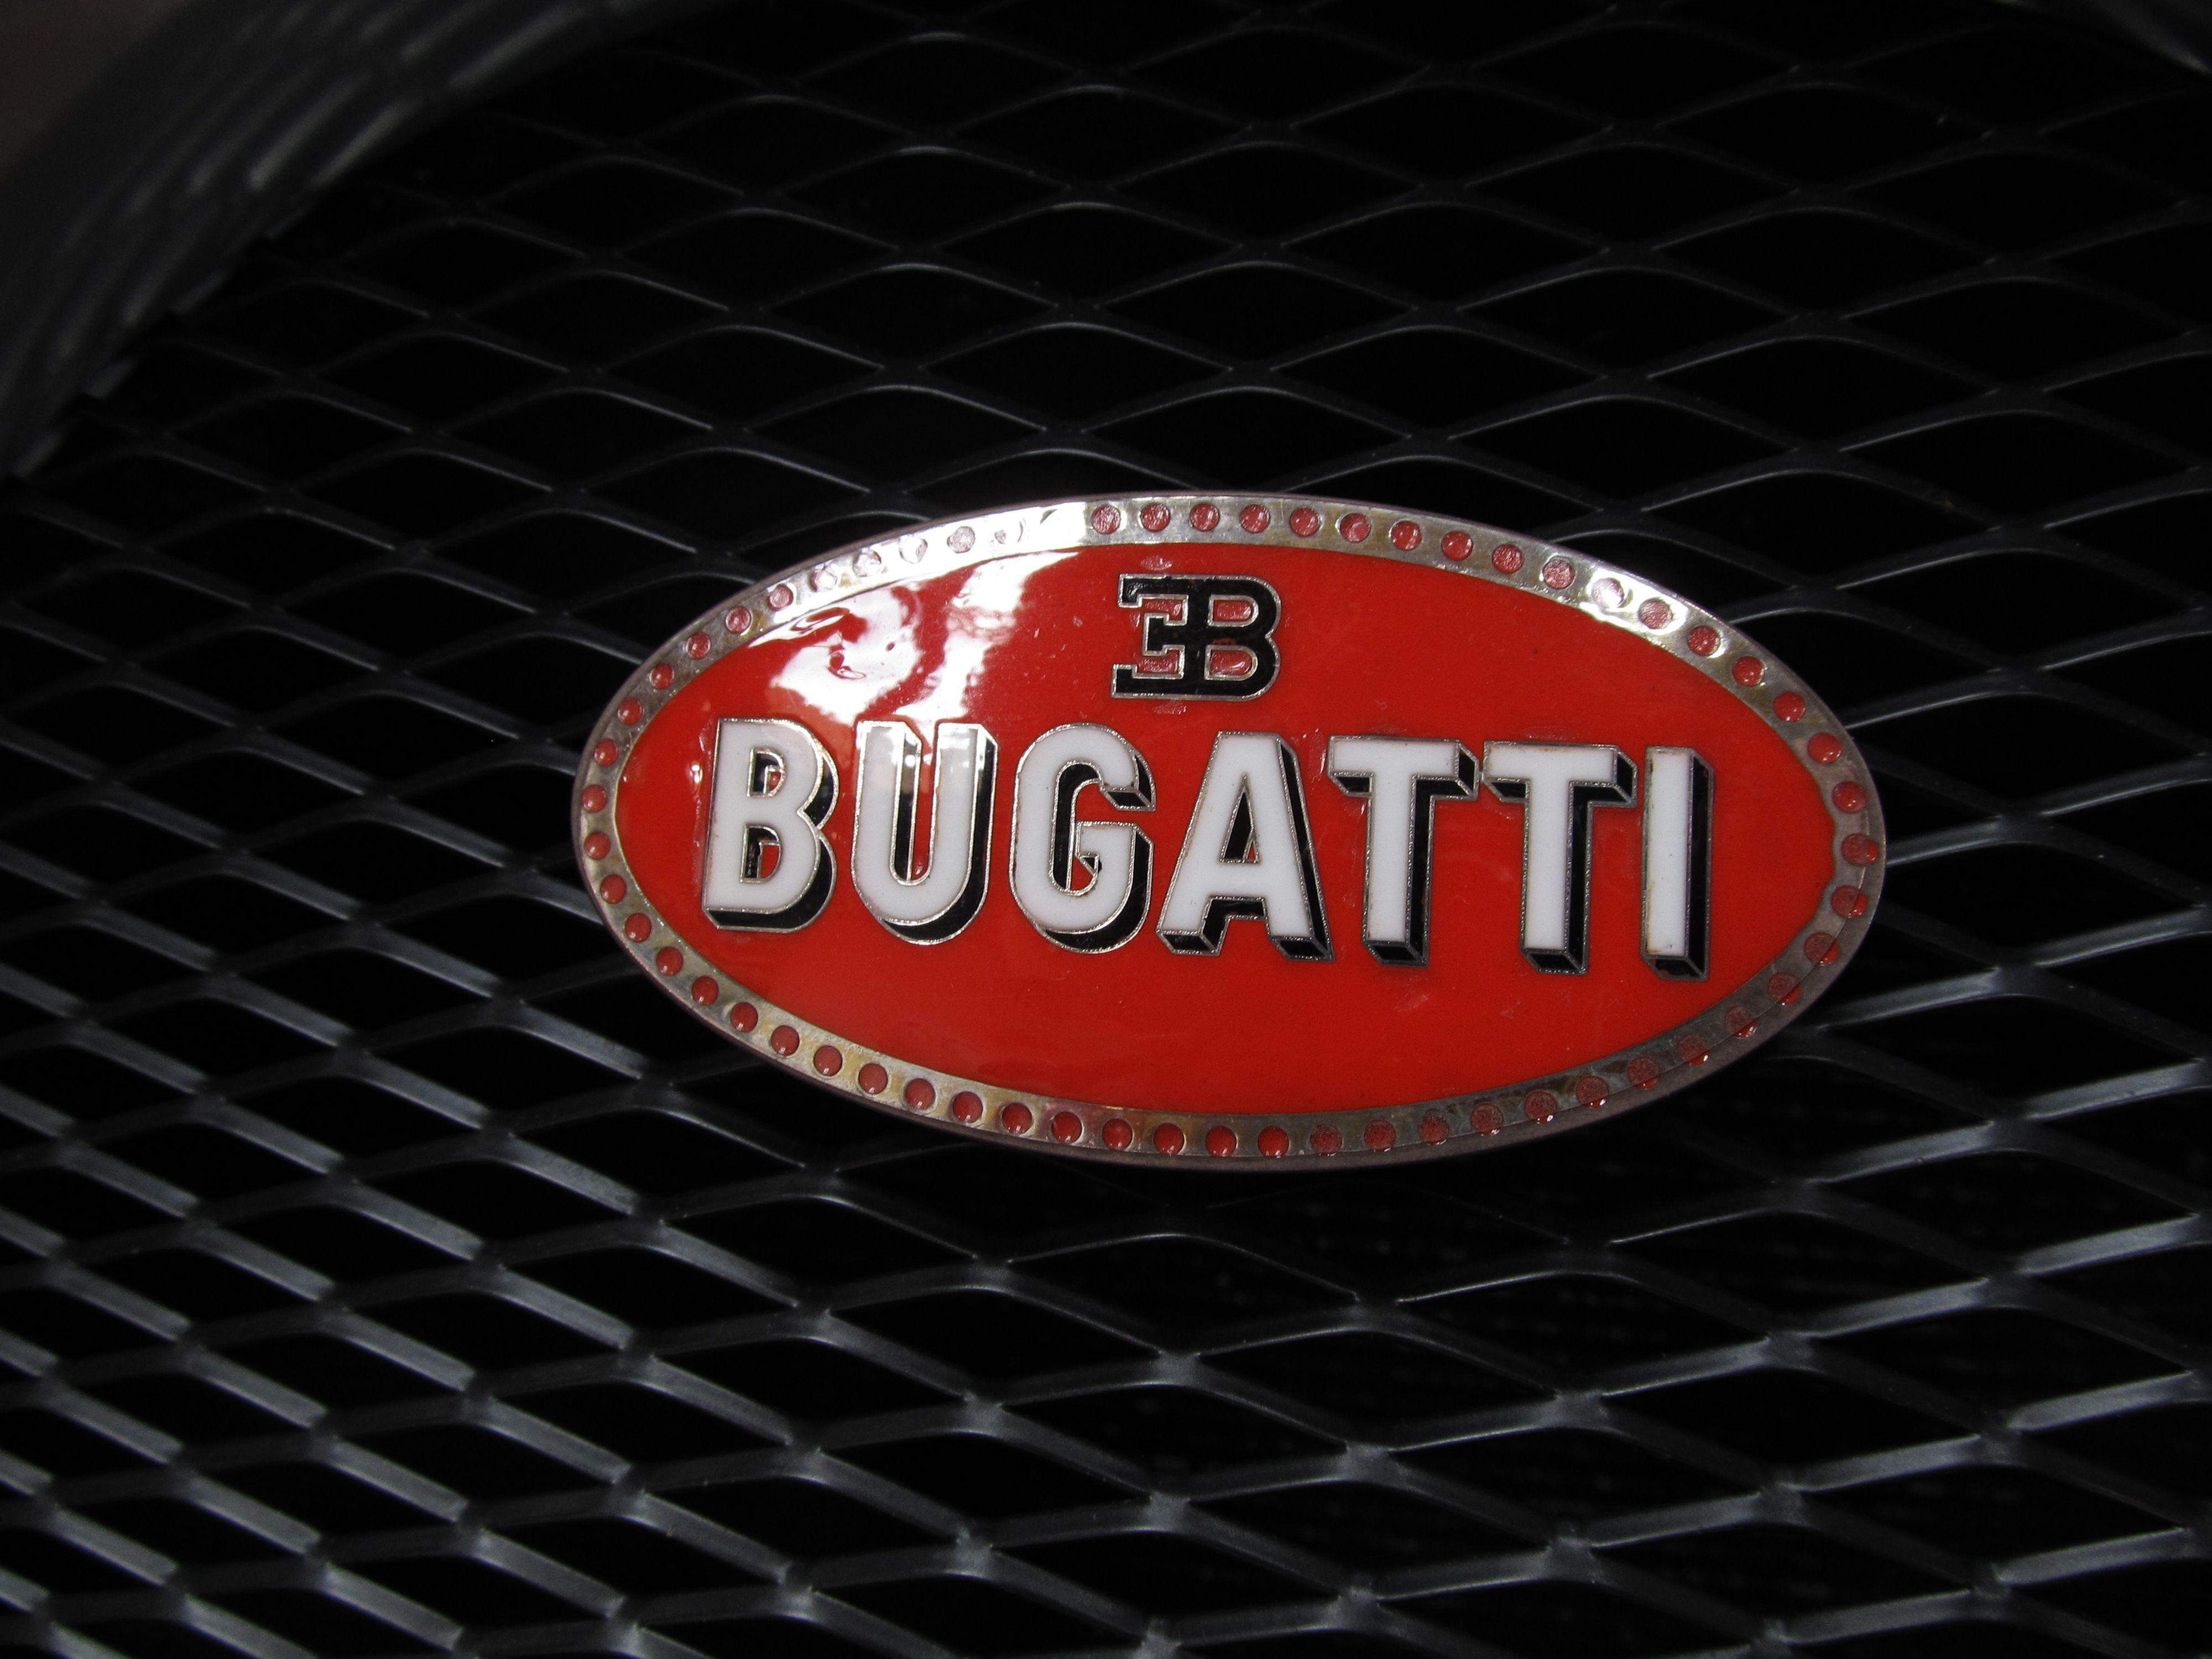 Buggati Logo - Bugatti Logo, Bugatti Car Symbol Meaning and History | Car Brand ...